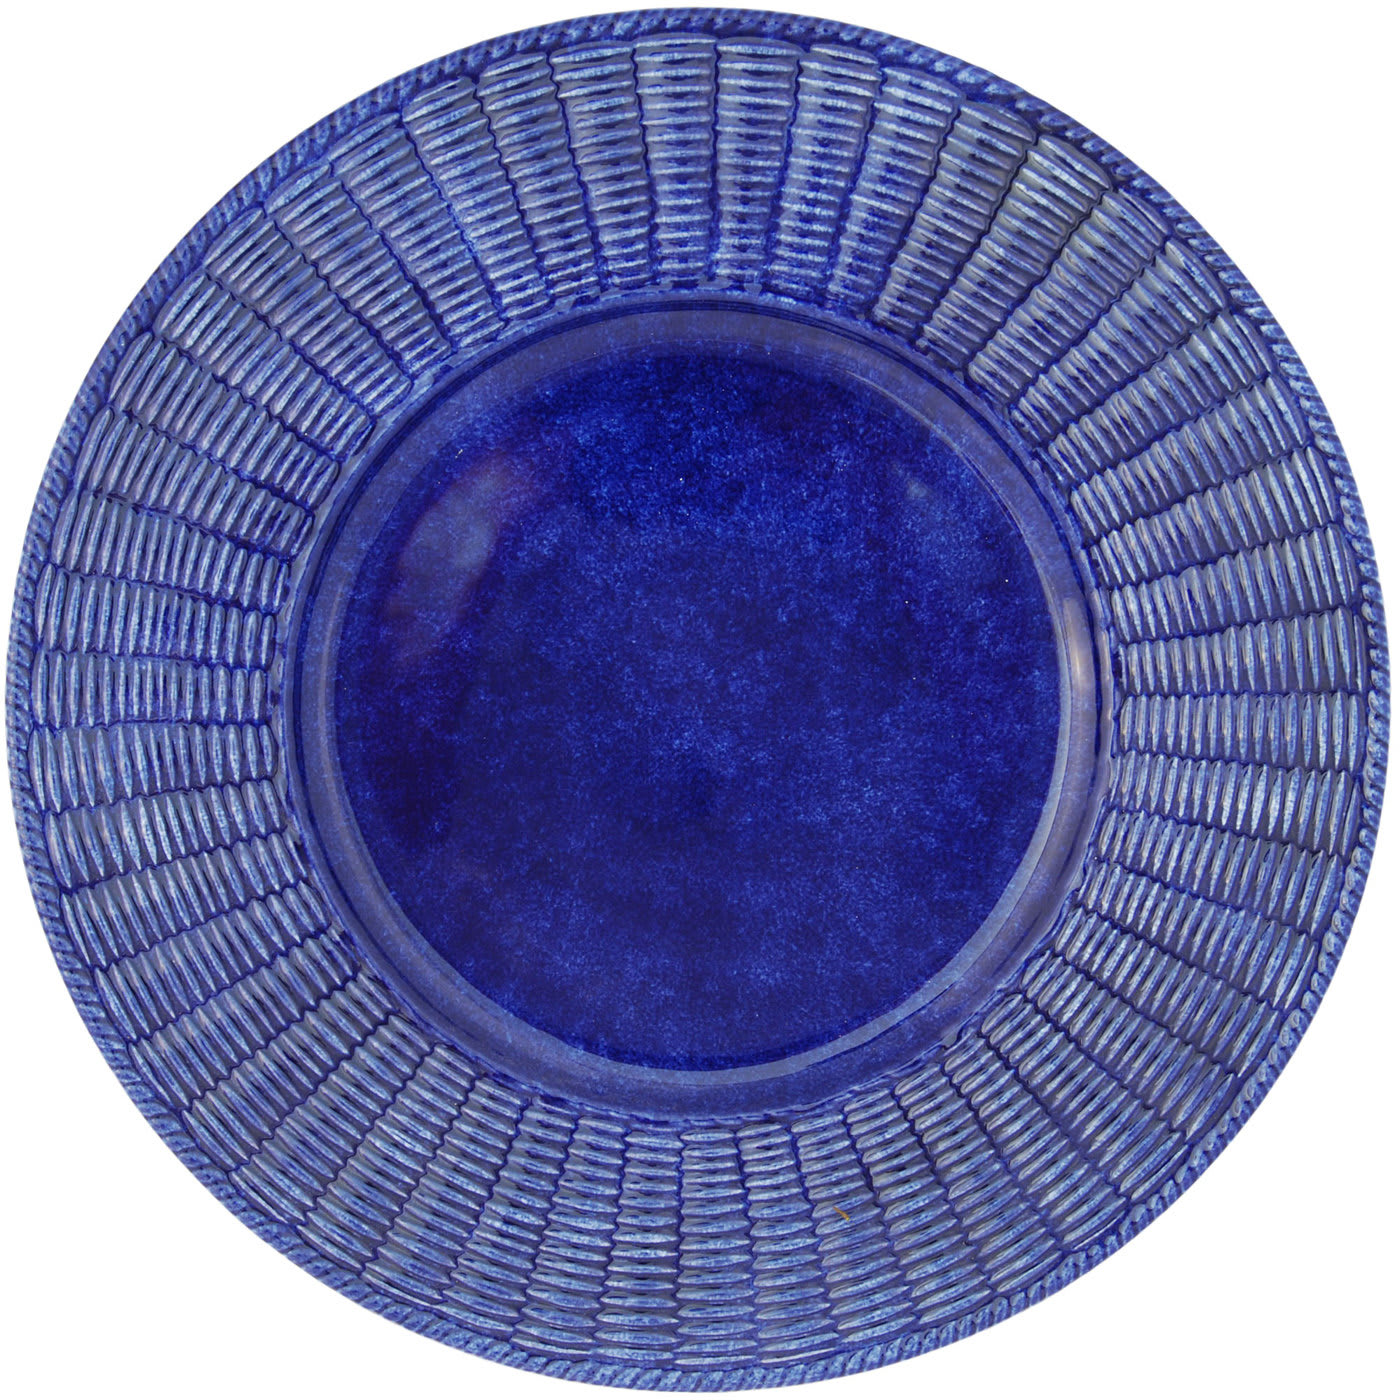 Este Blue Ceramic Plates Set for Two - Este Ceramiche